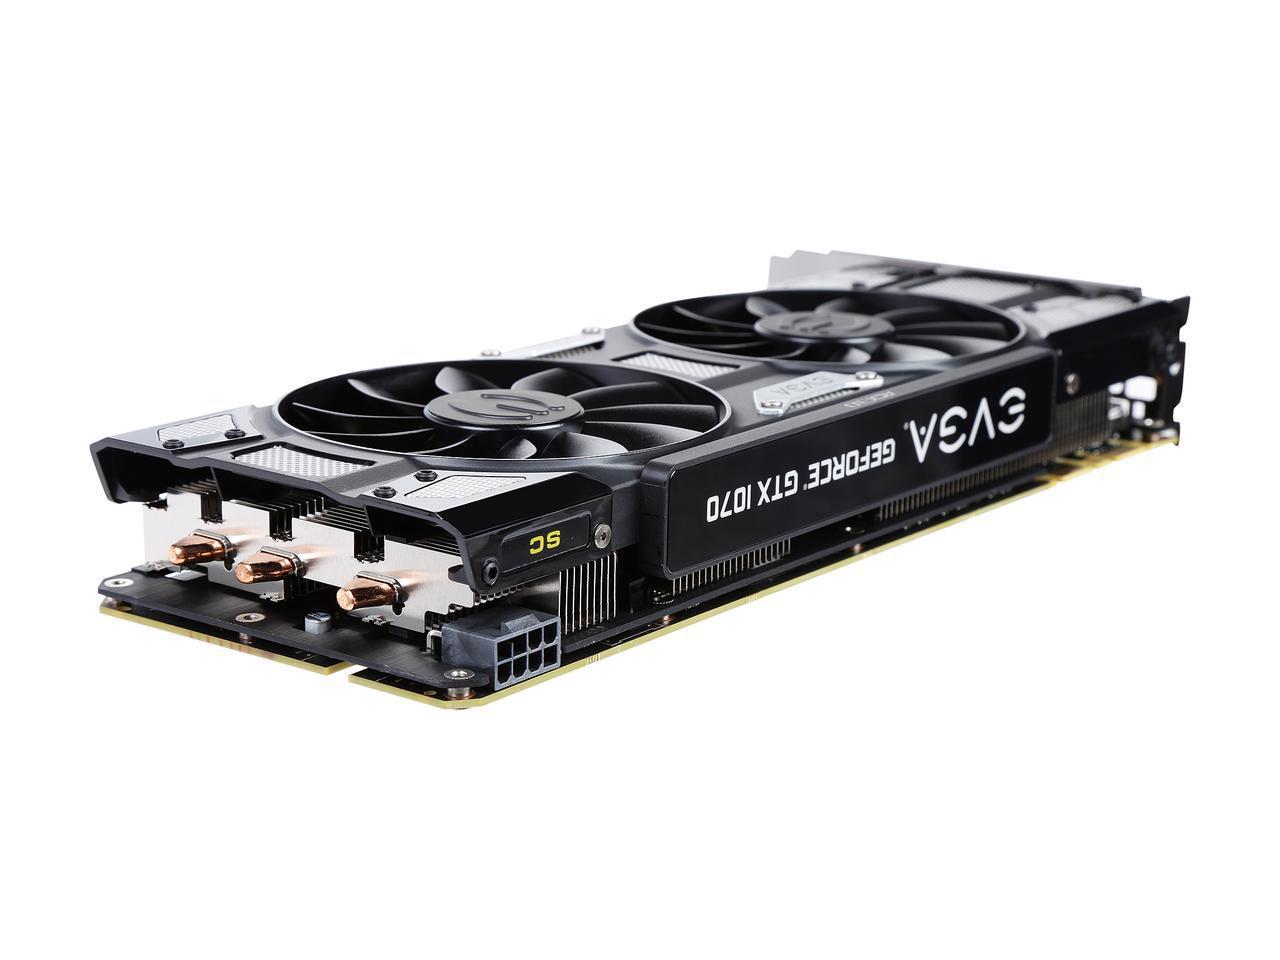 EVGA GeForce GTX 1070 SC GAMING ACX 3.0 Black Edition, 08G-P4-5173-KR, 8GB GDDR5, LED, DX12 OSD Support (PXOC) Video Graphics Ca